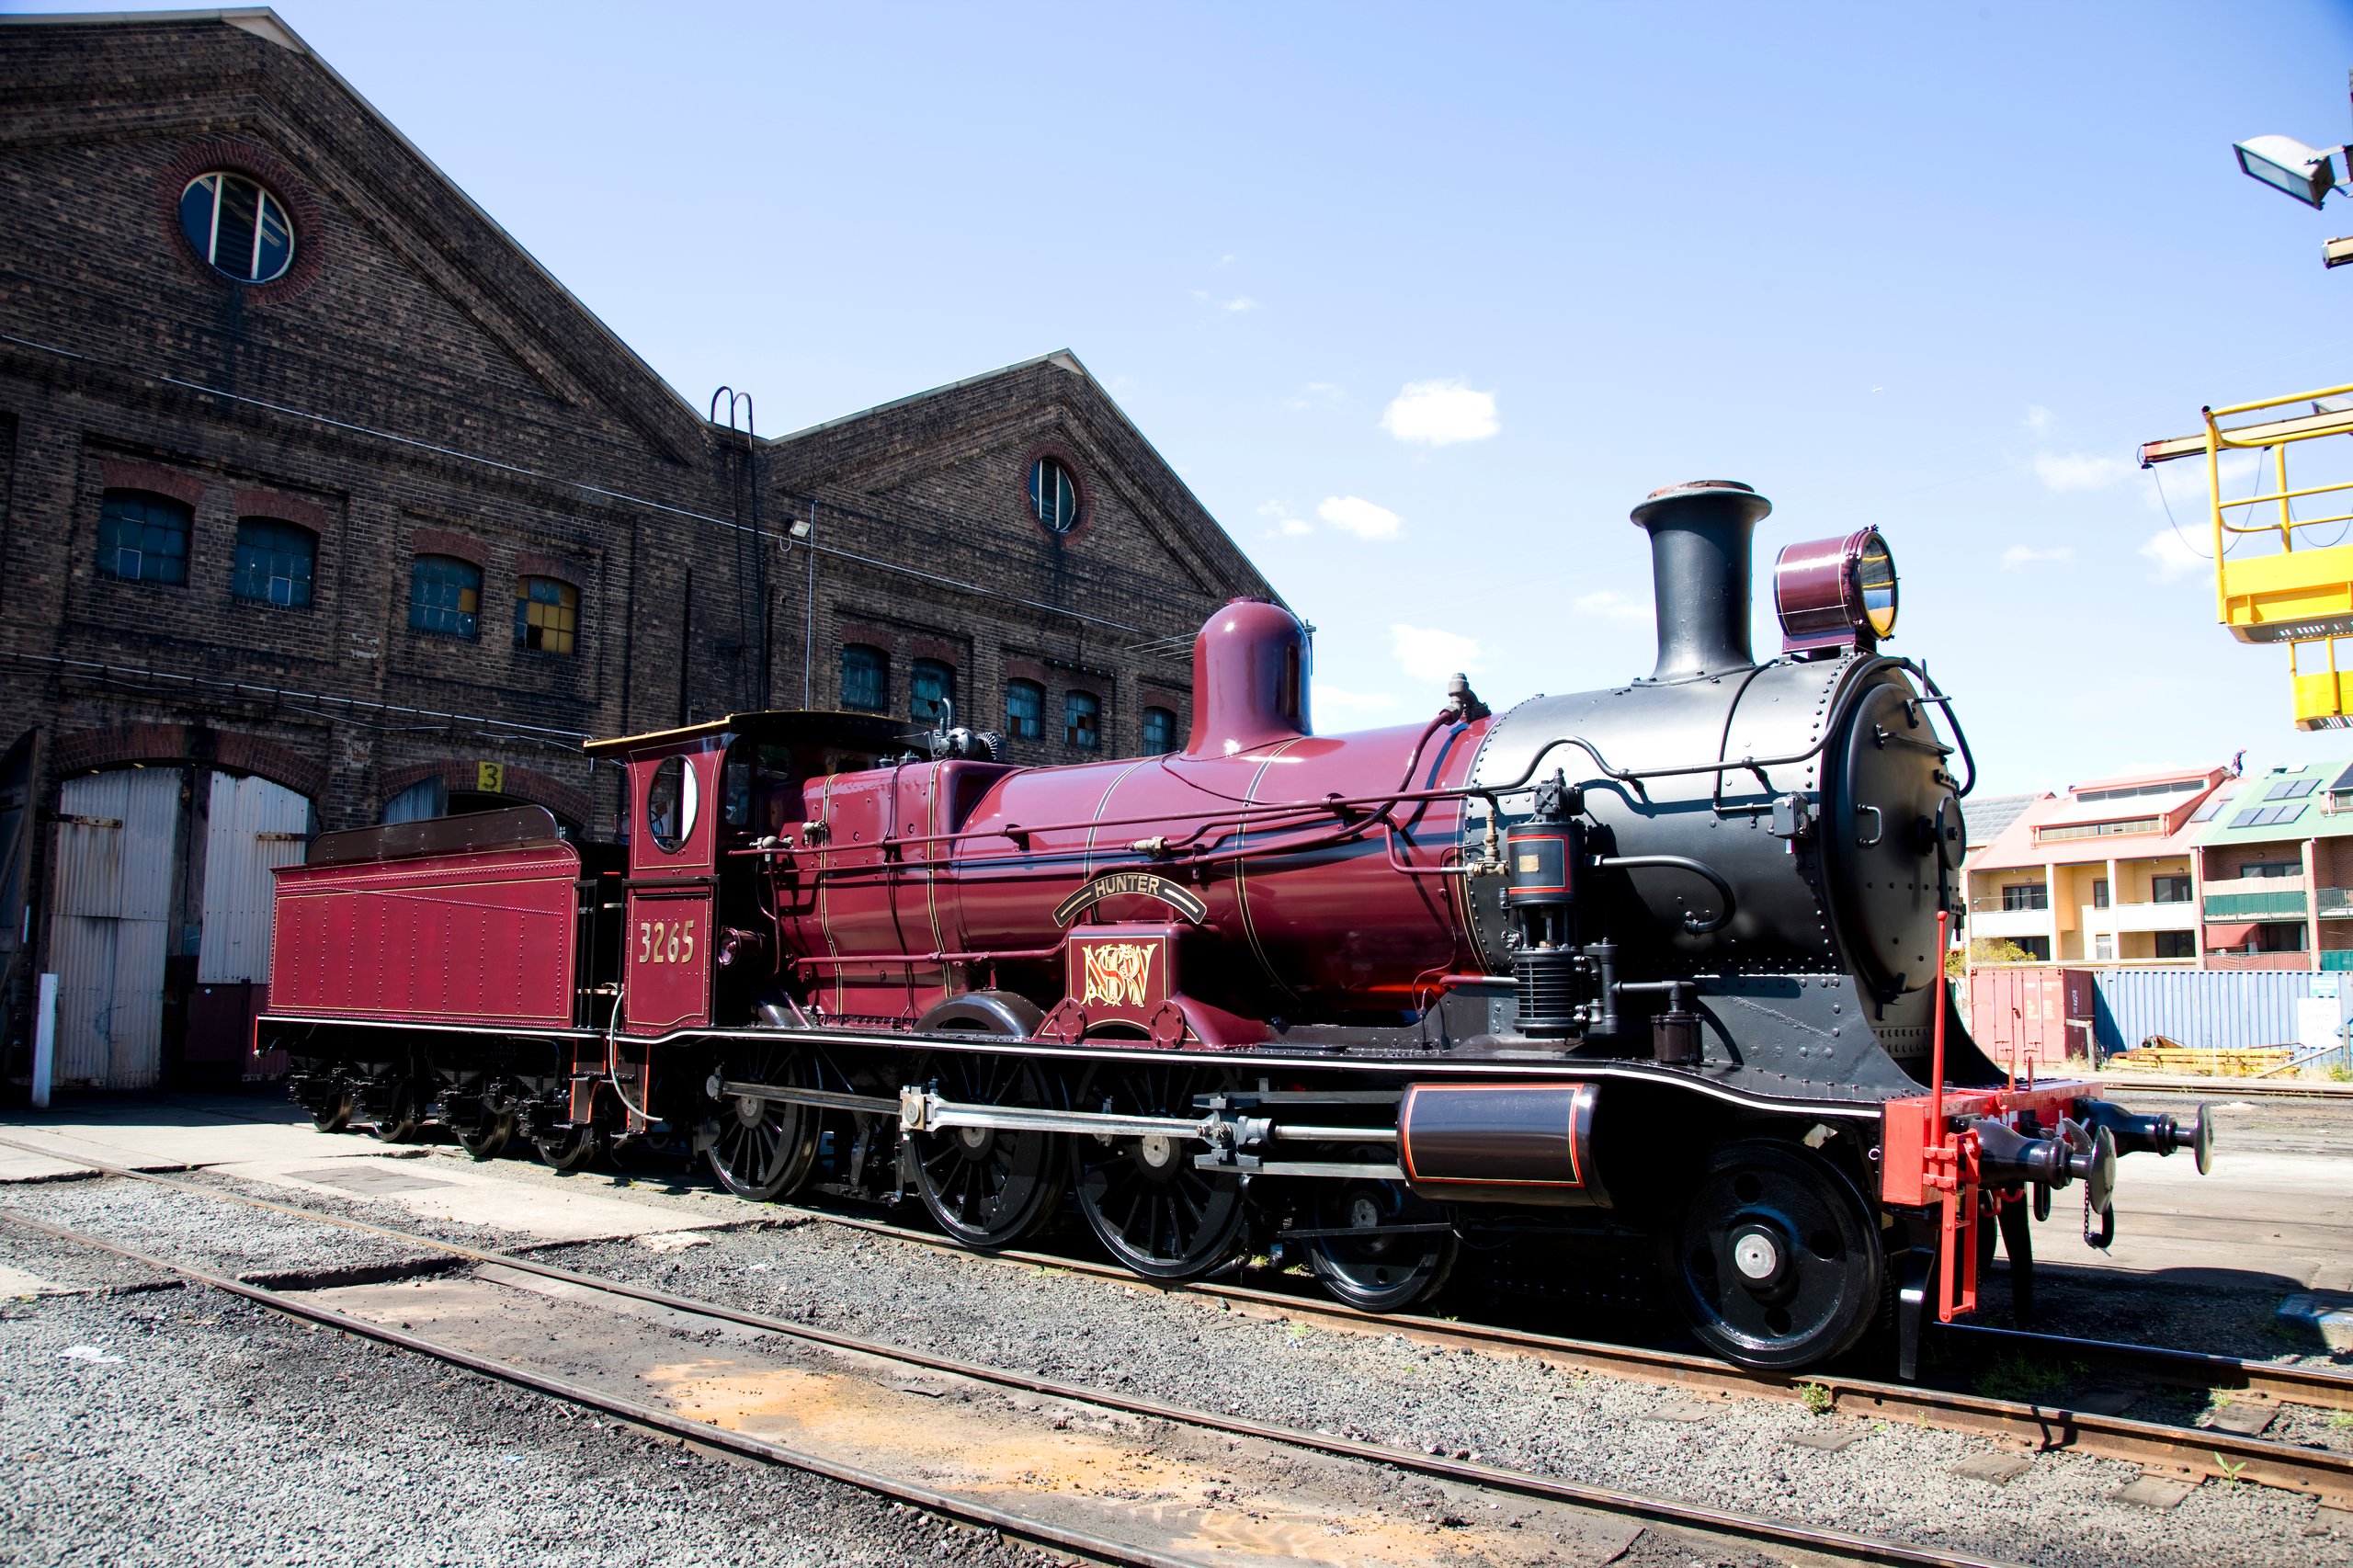 Steam locomotive No. 3265